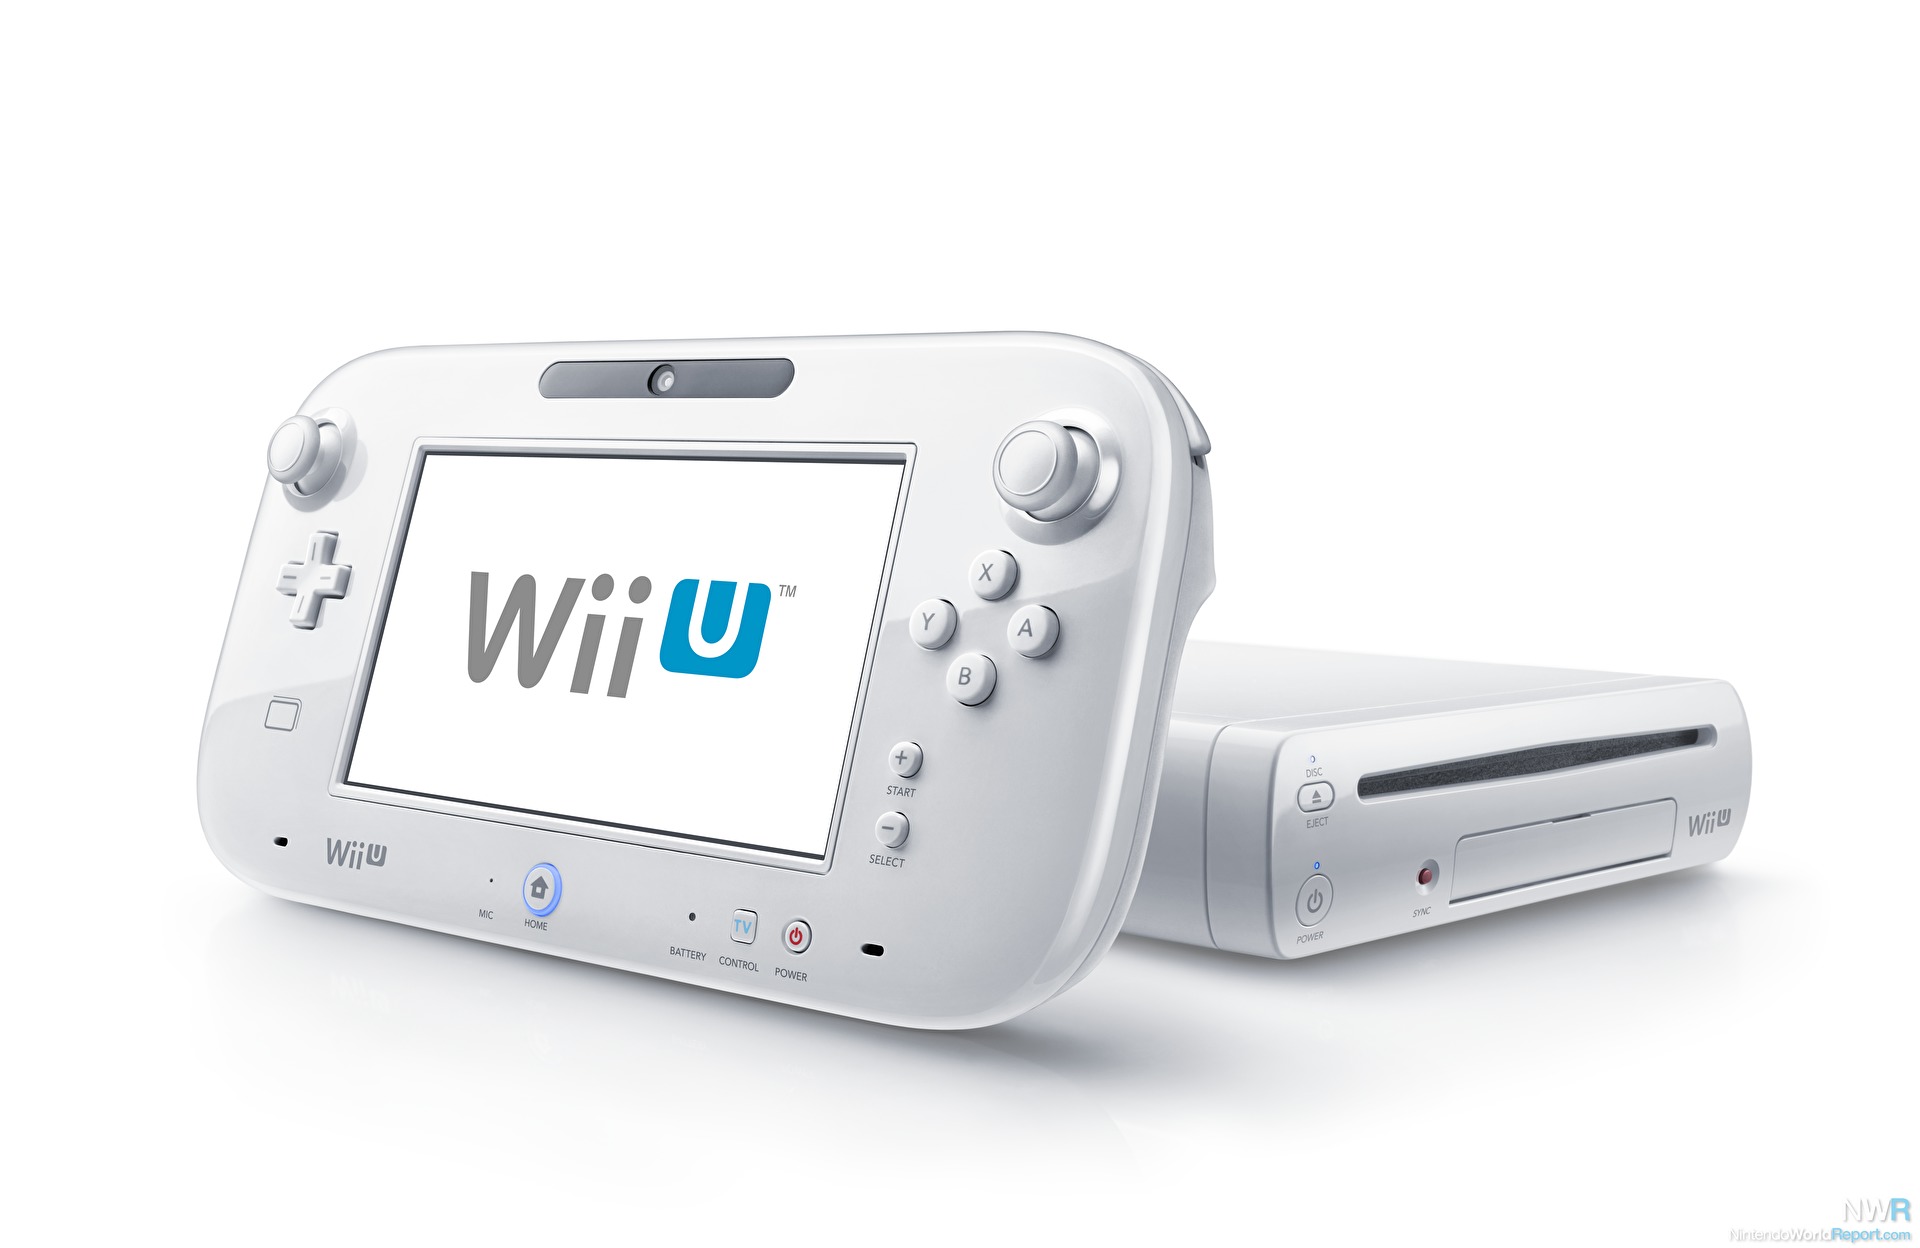 Nintendo Wii U to go on sale Nov. 18